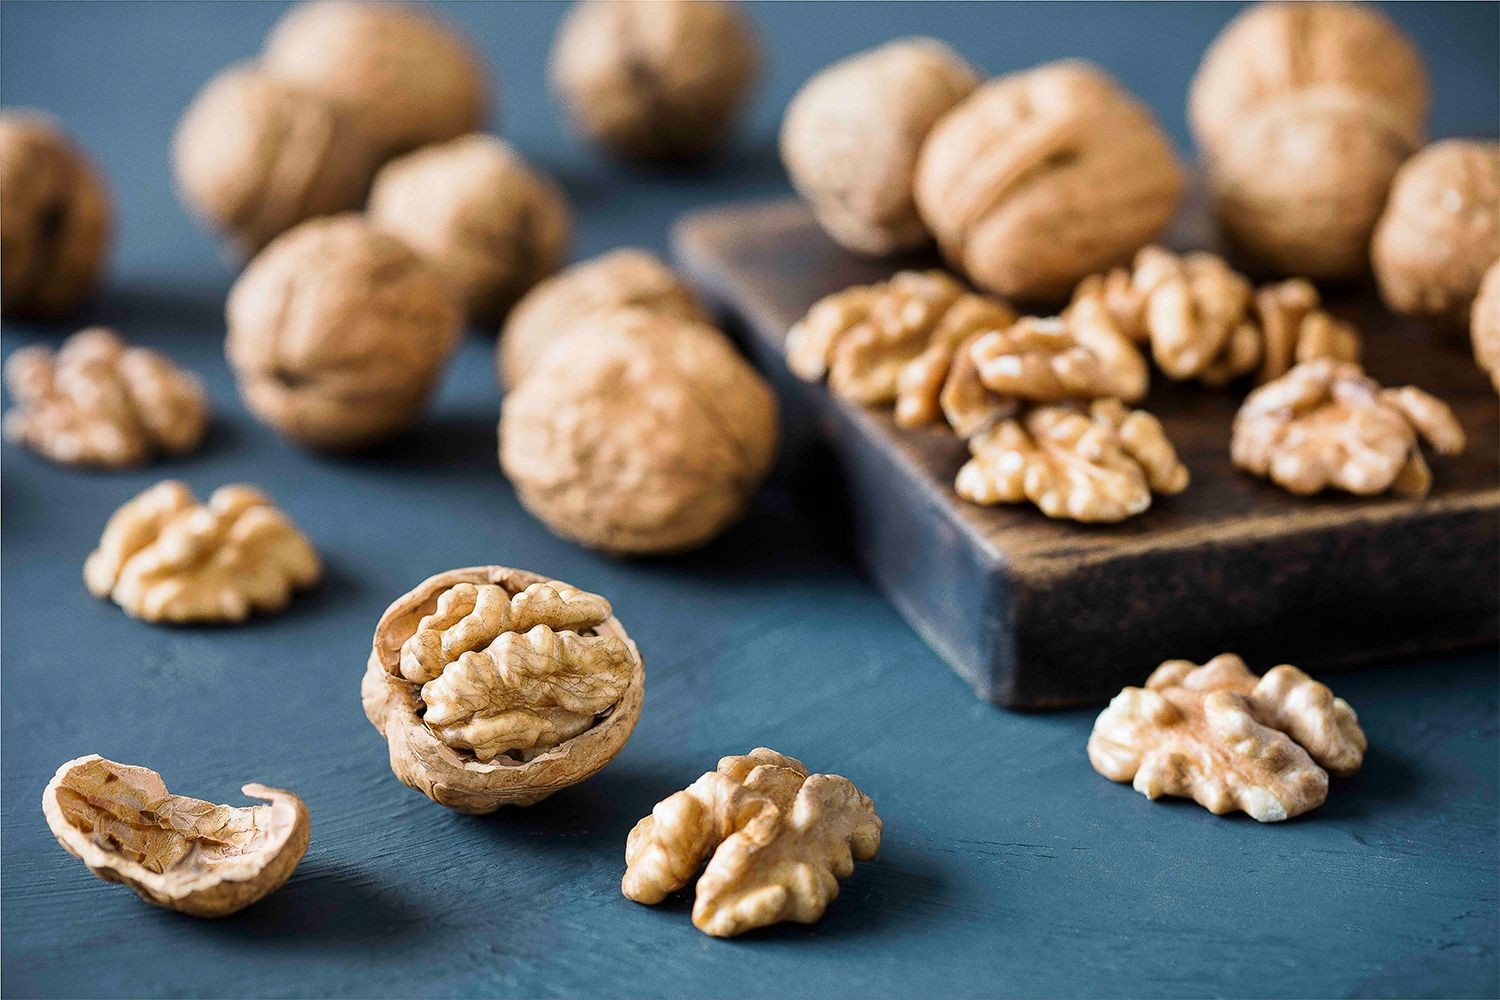 walnuts-are-heart-healthy-108525-3.jpg